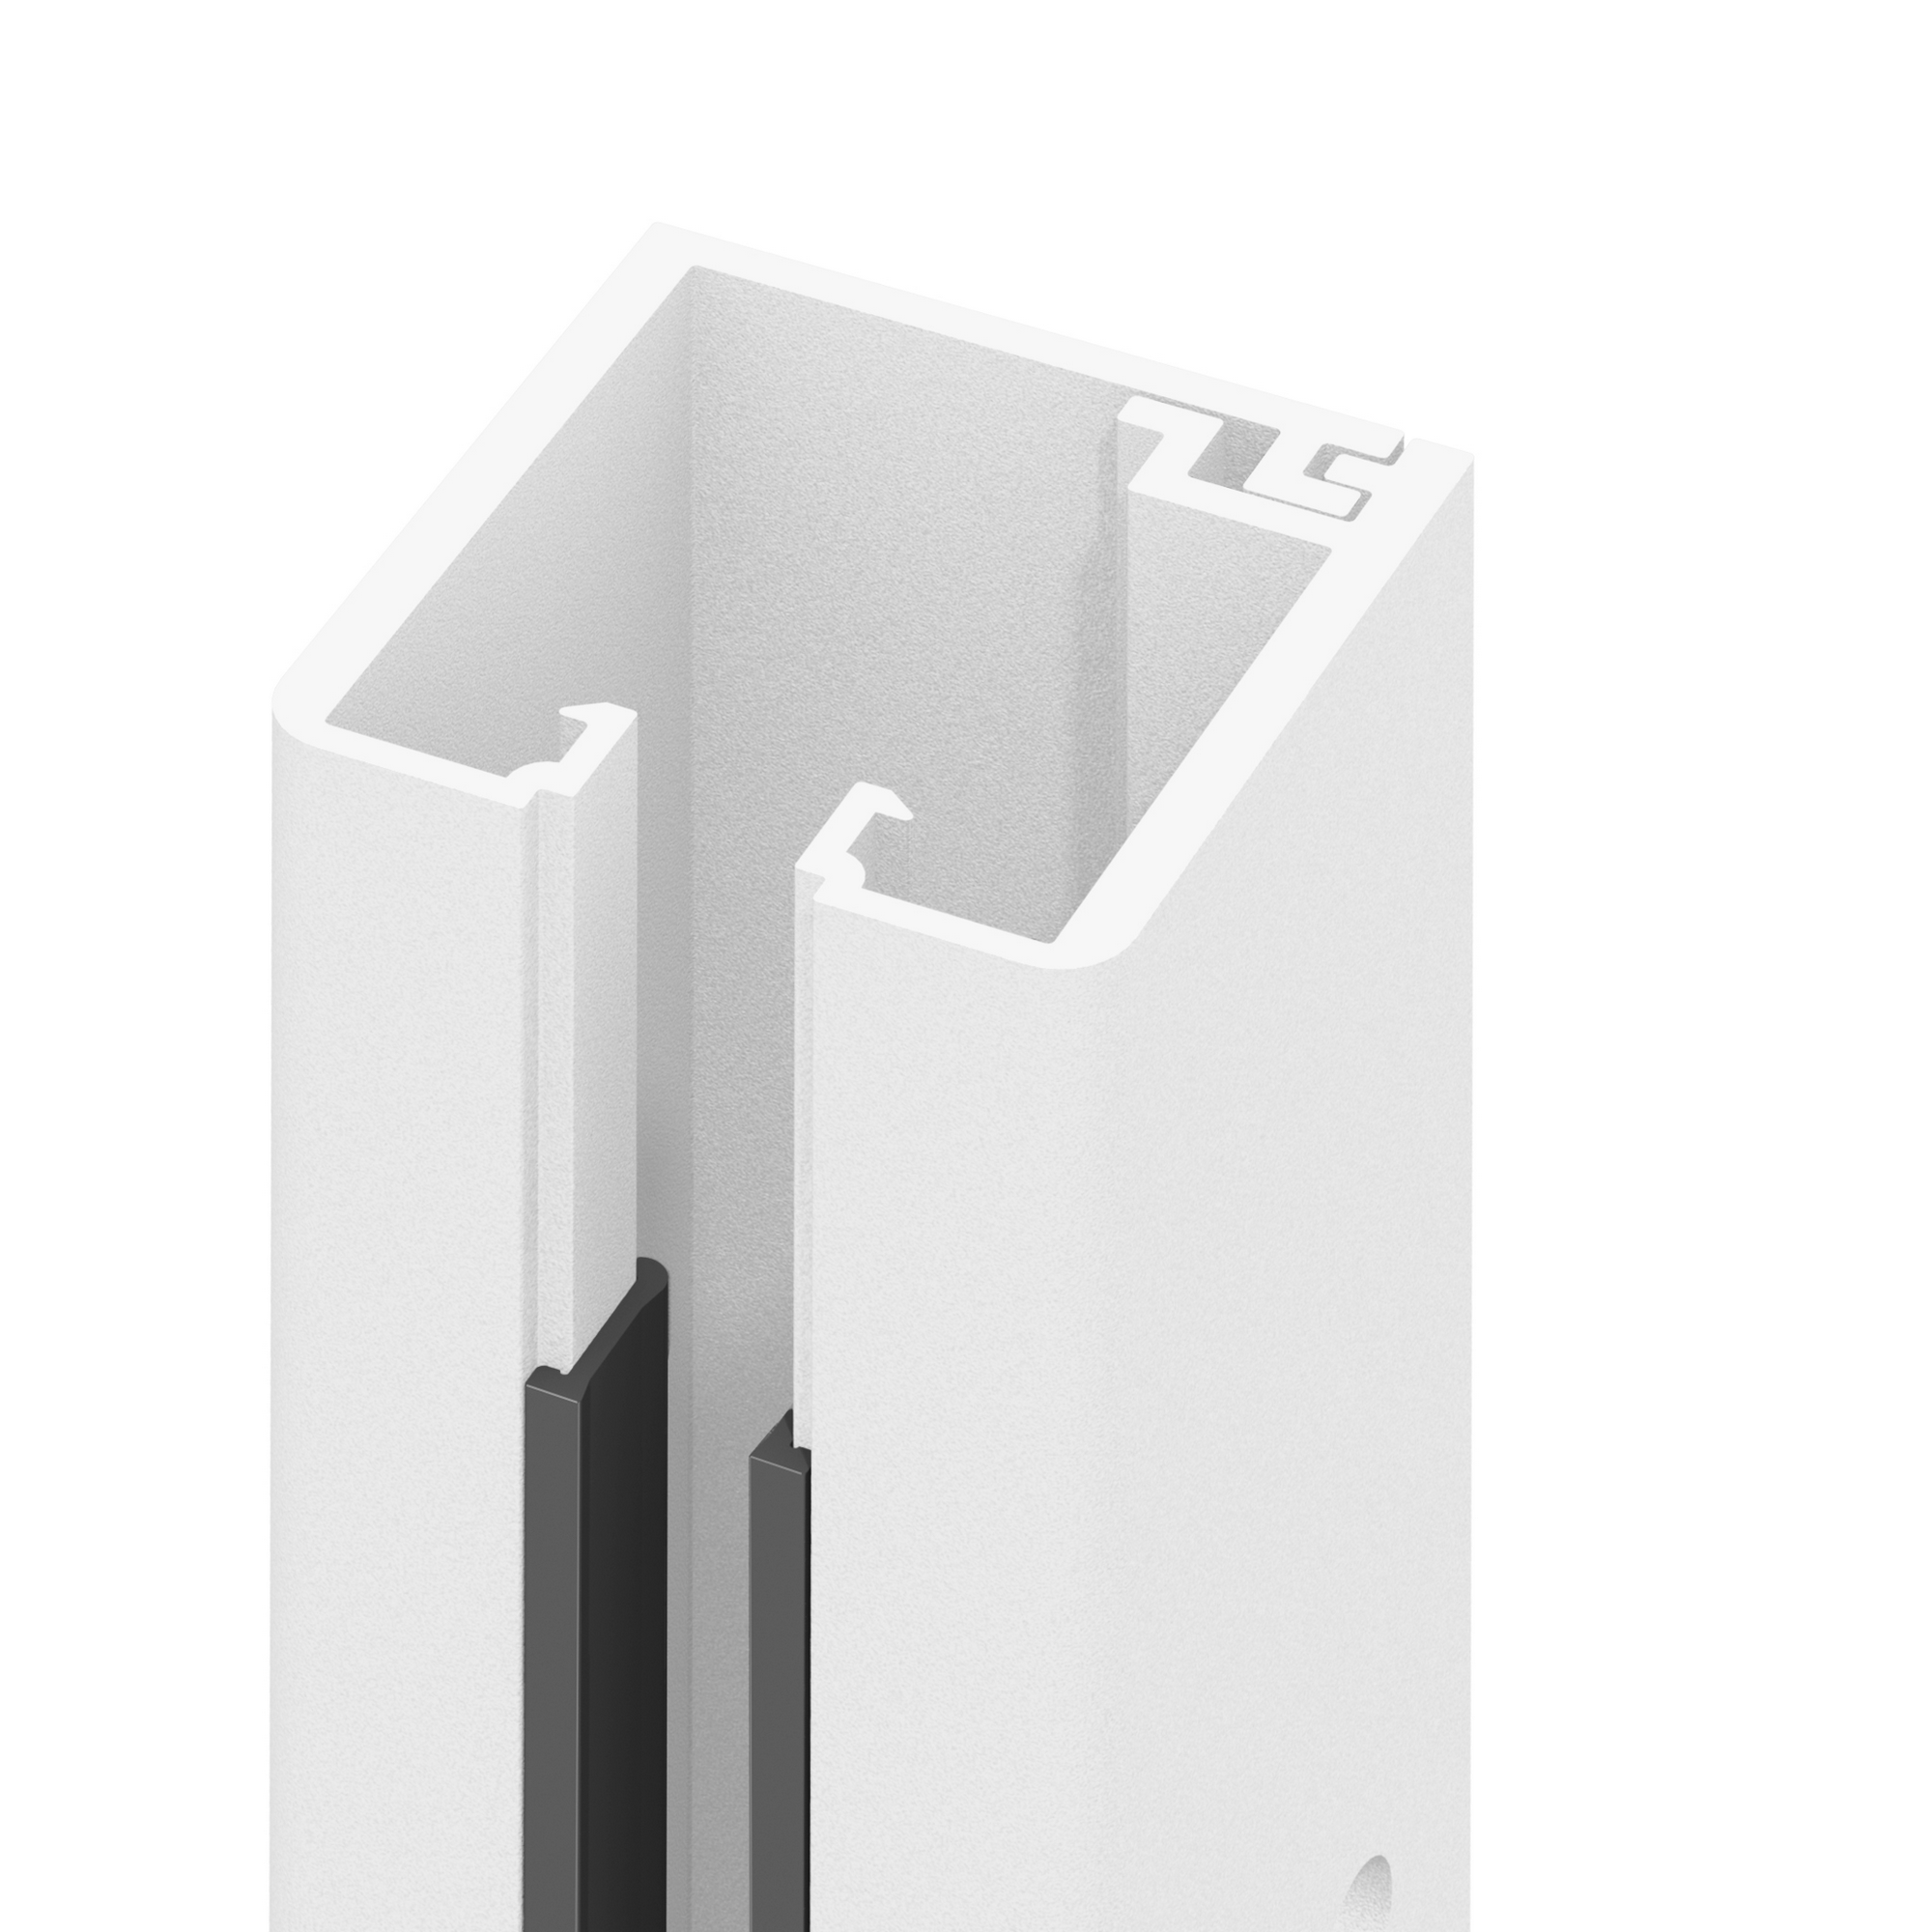 U-Klemmprofil 'System' weiß 105 cm + product picture